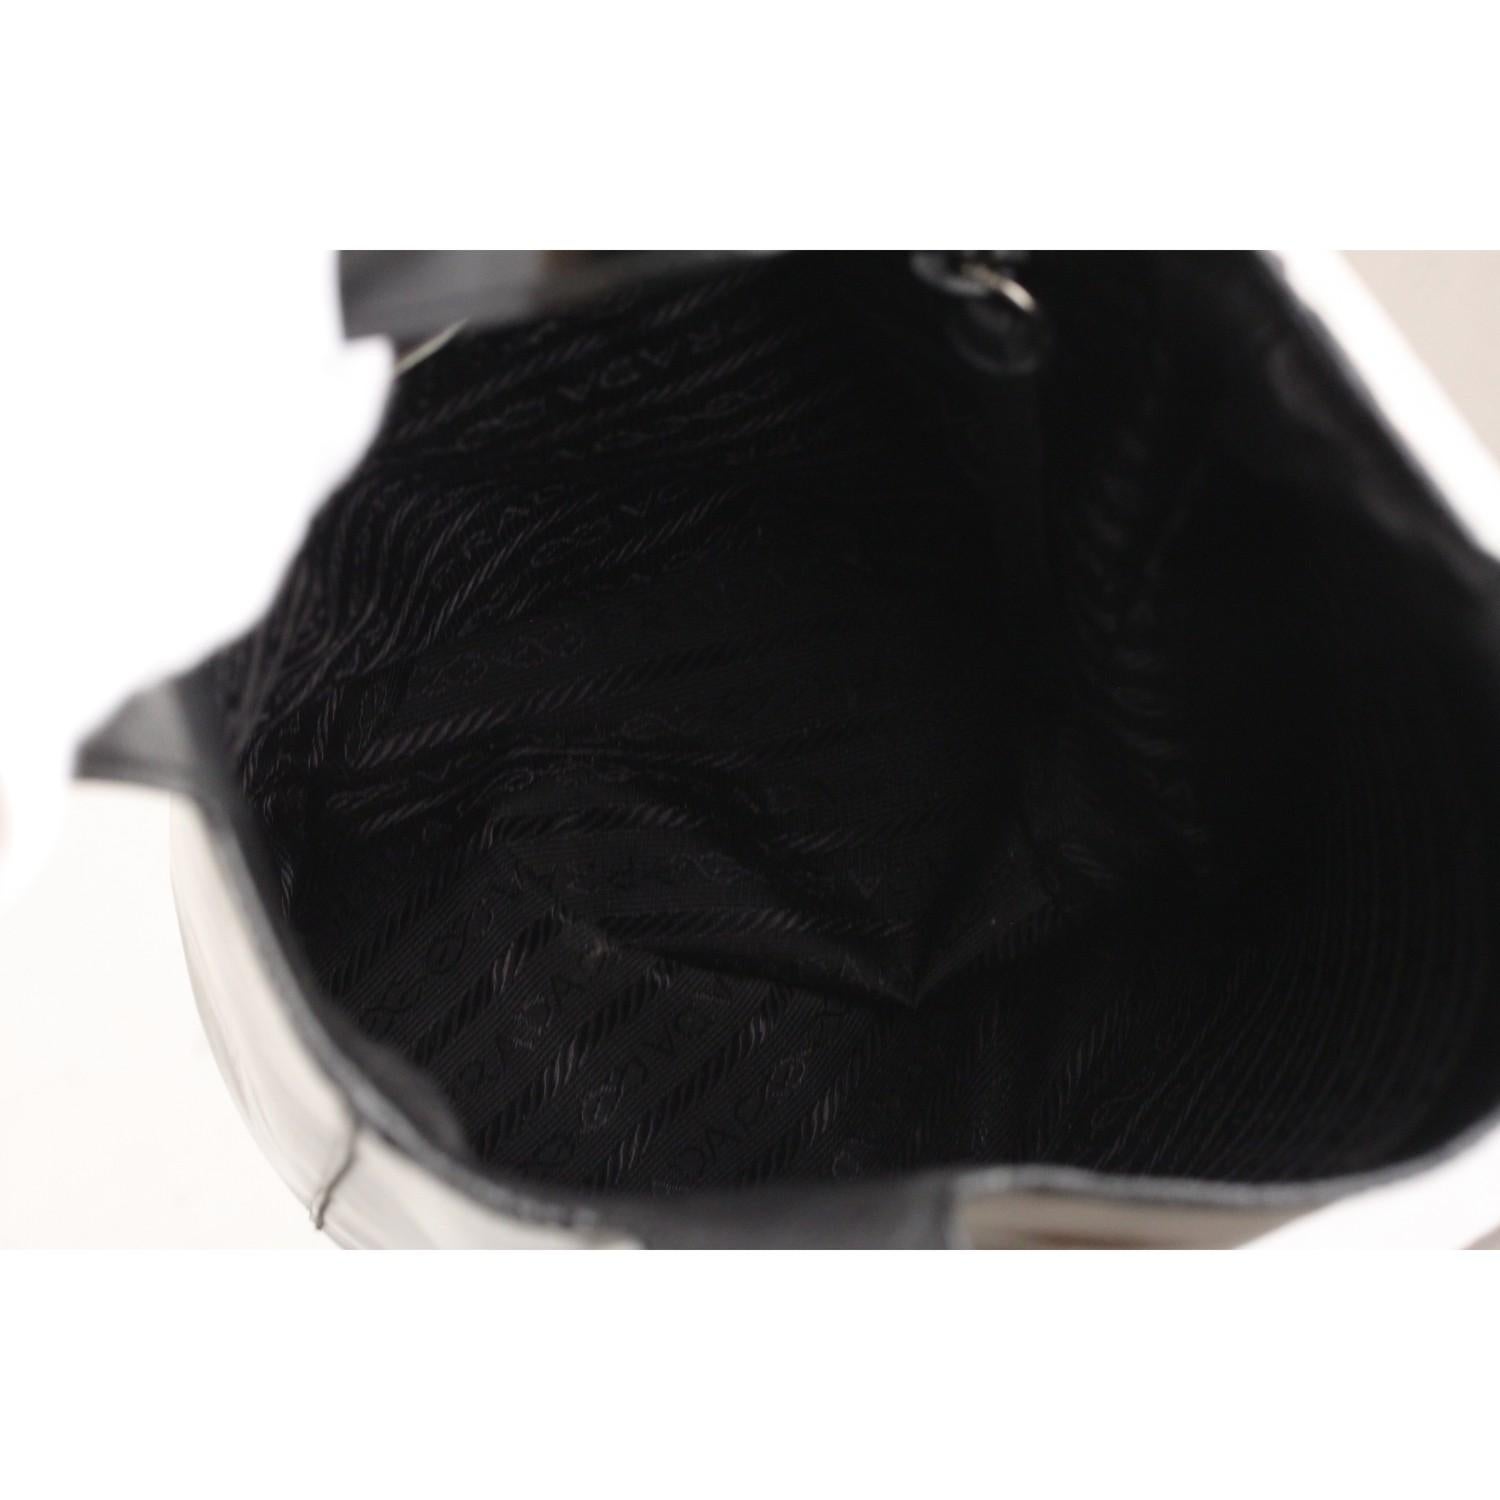 Prada Black Patent Leather Bucket Bag Tote Handbag 1